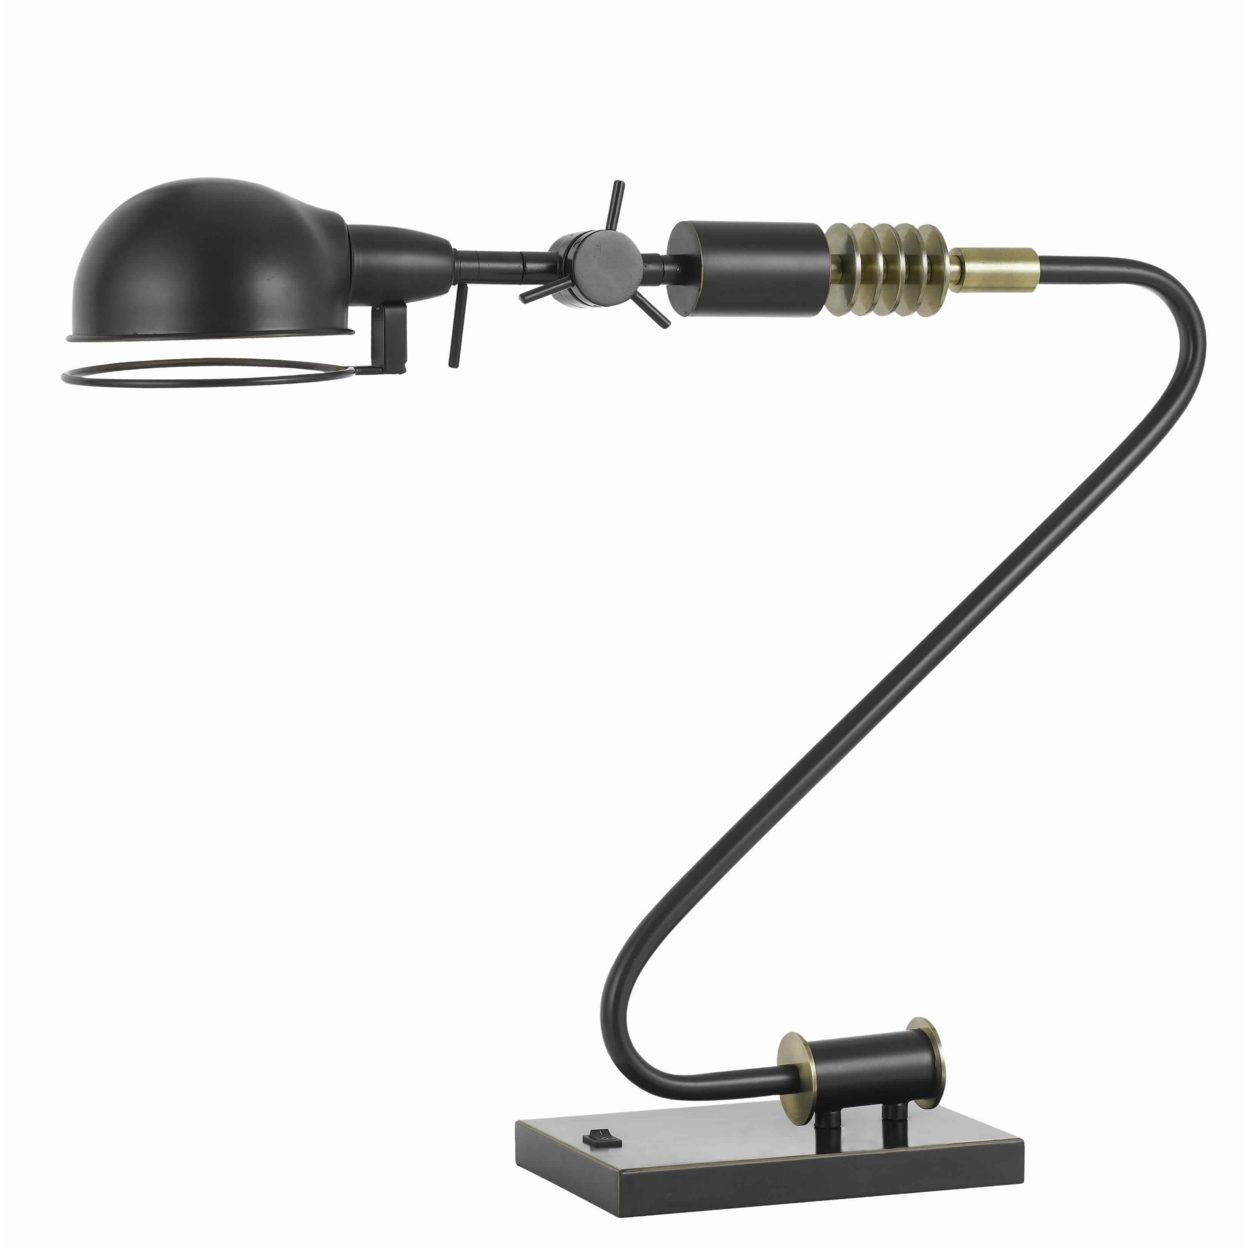 Adjustable Head Metal Desk Lamp With Curved Design Tubular Stand, Black- Saltoro Sherpi